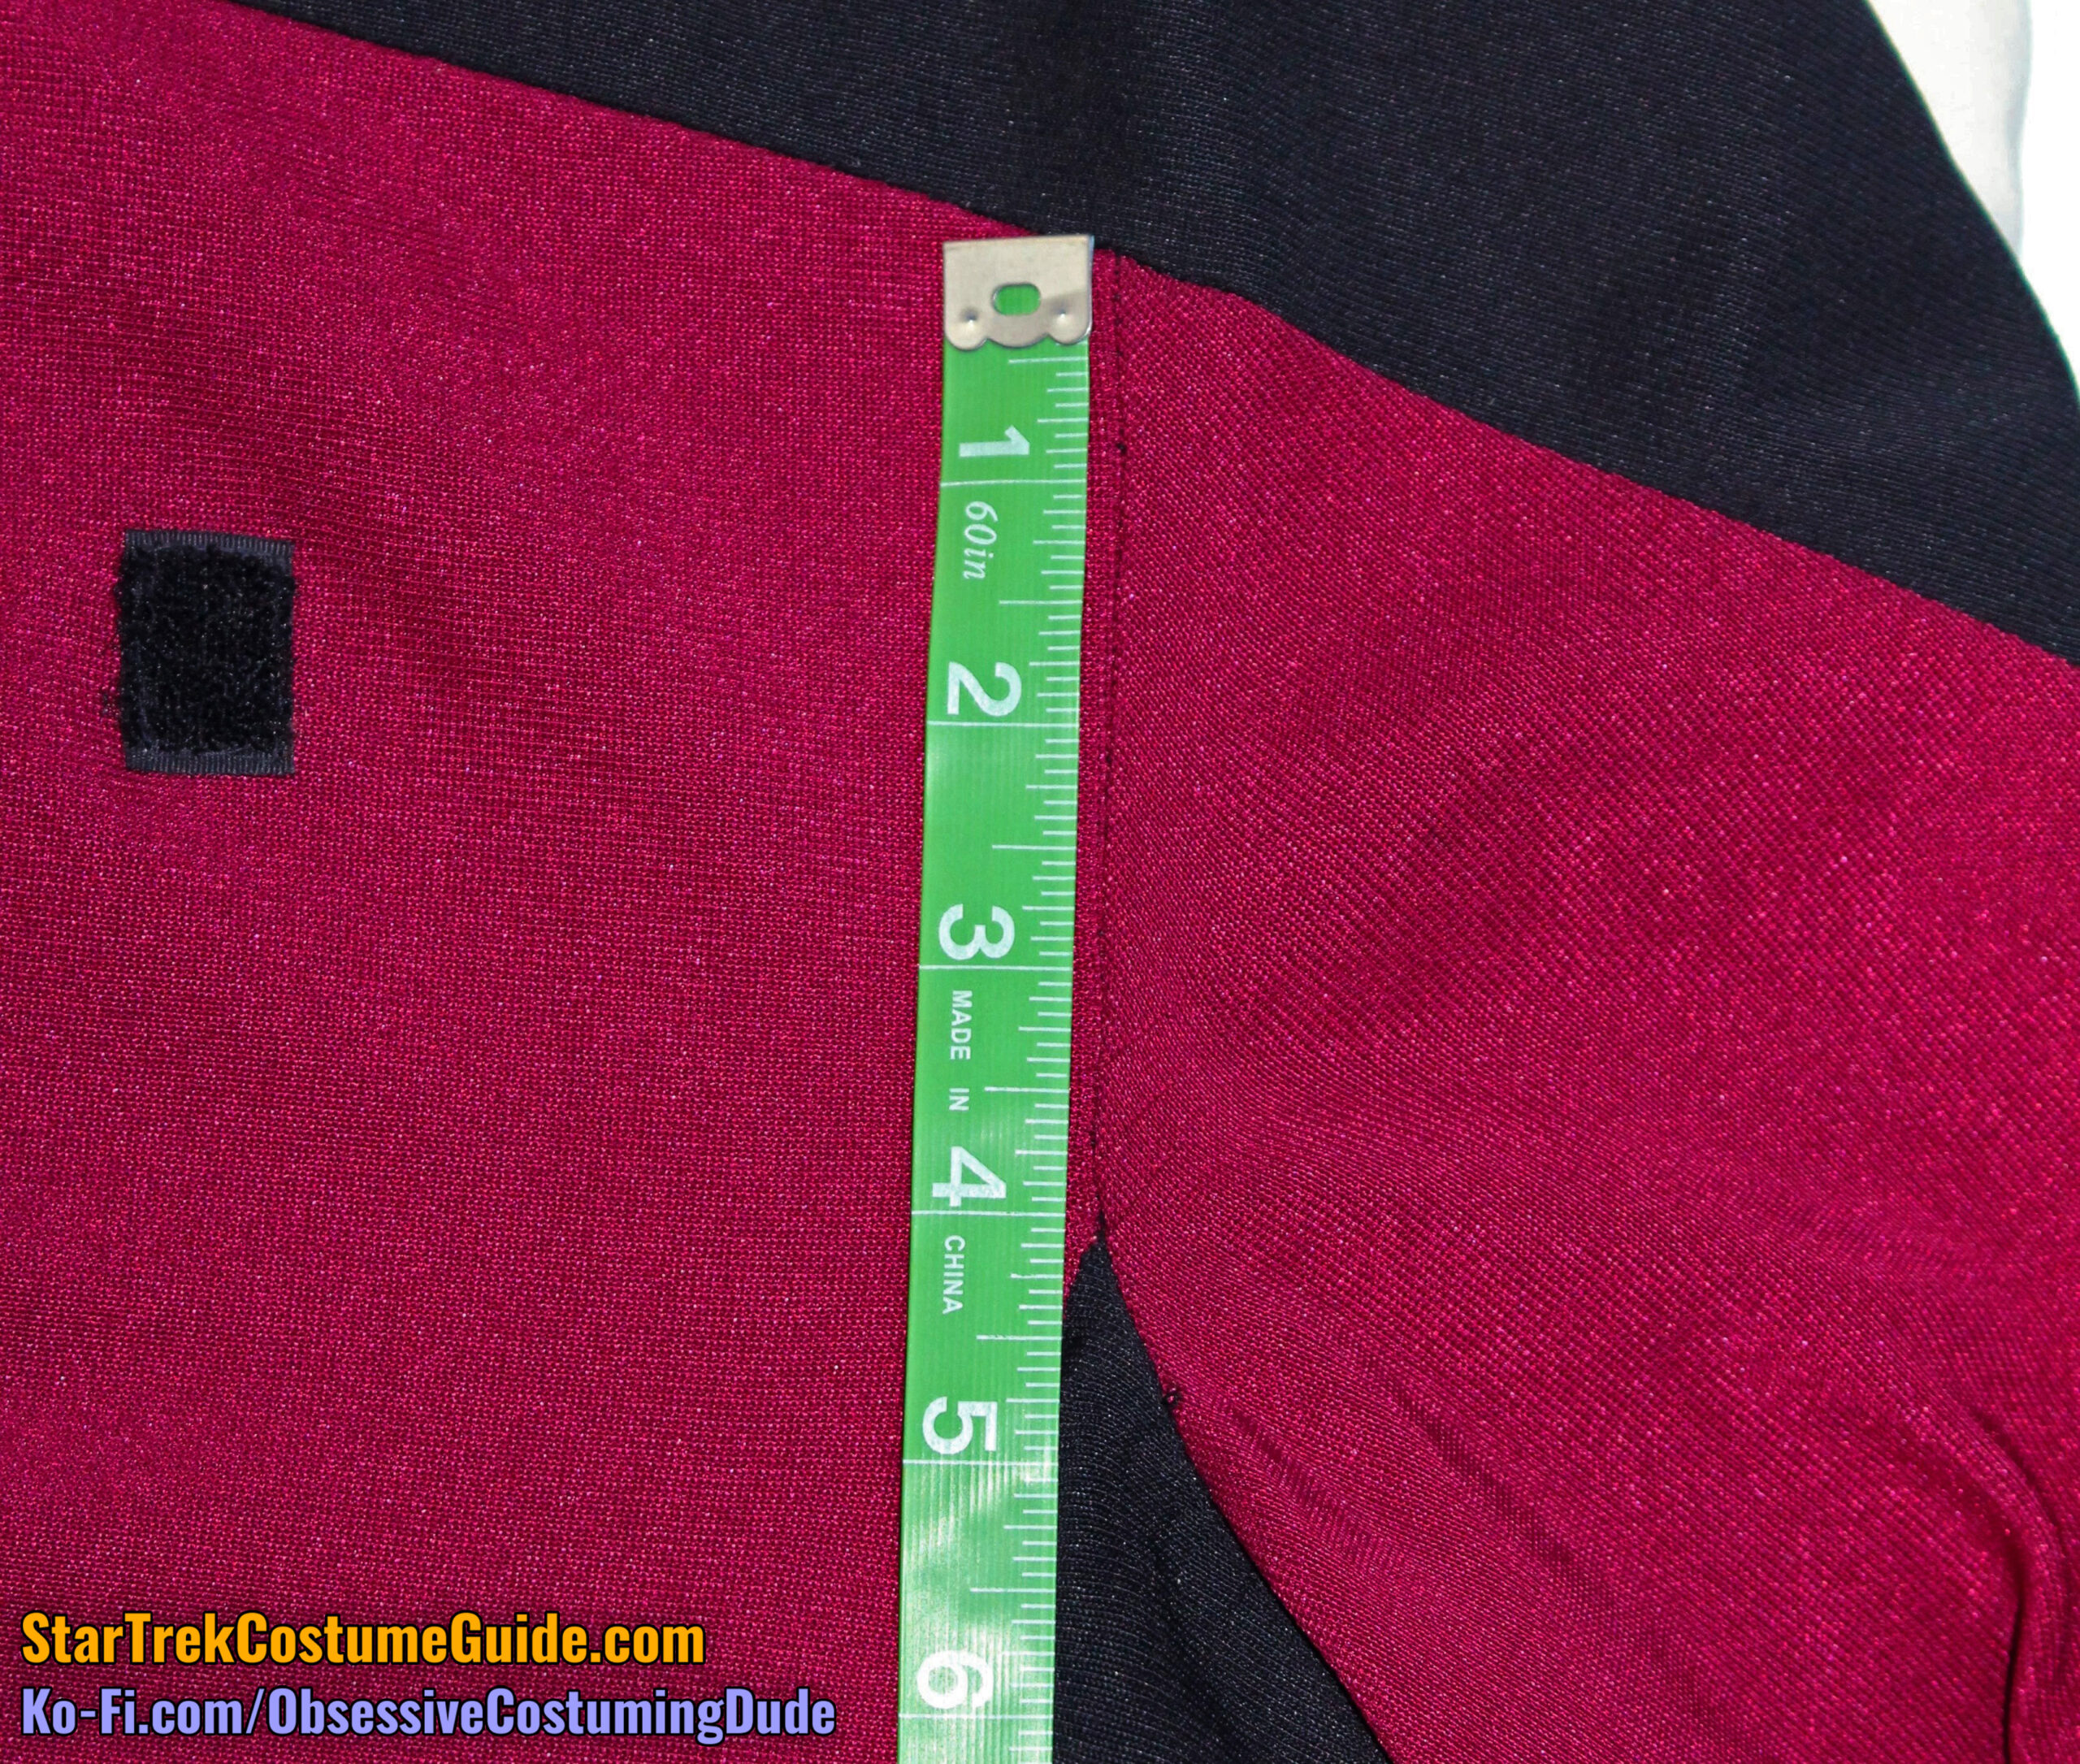 Worf TNG jumpsuit - Star Trek Costume Guide